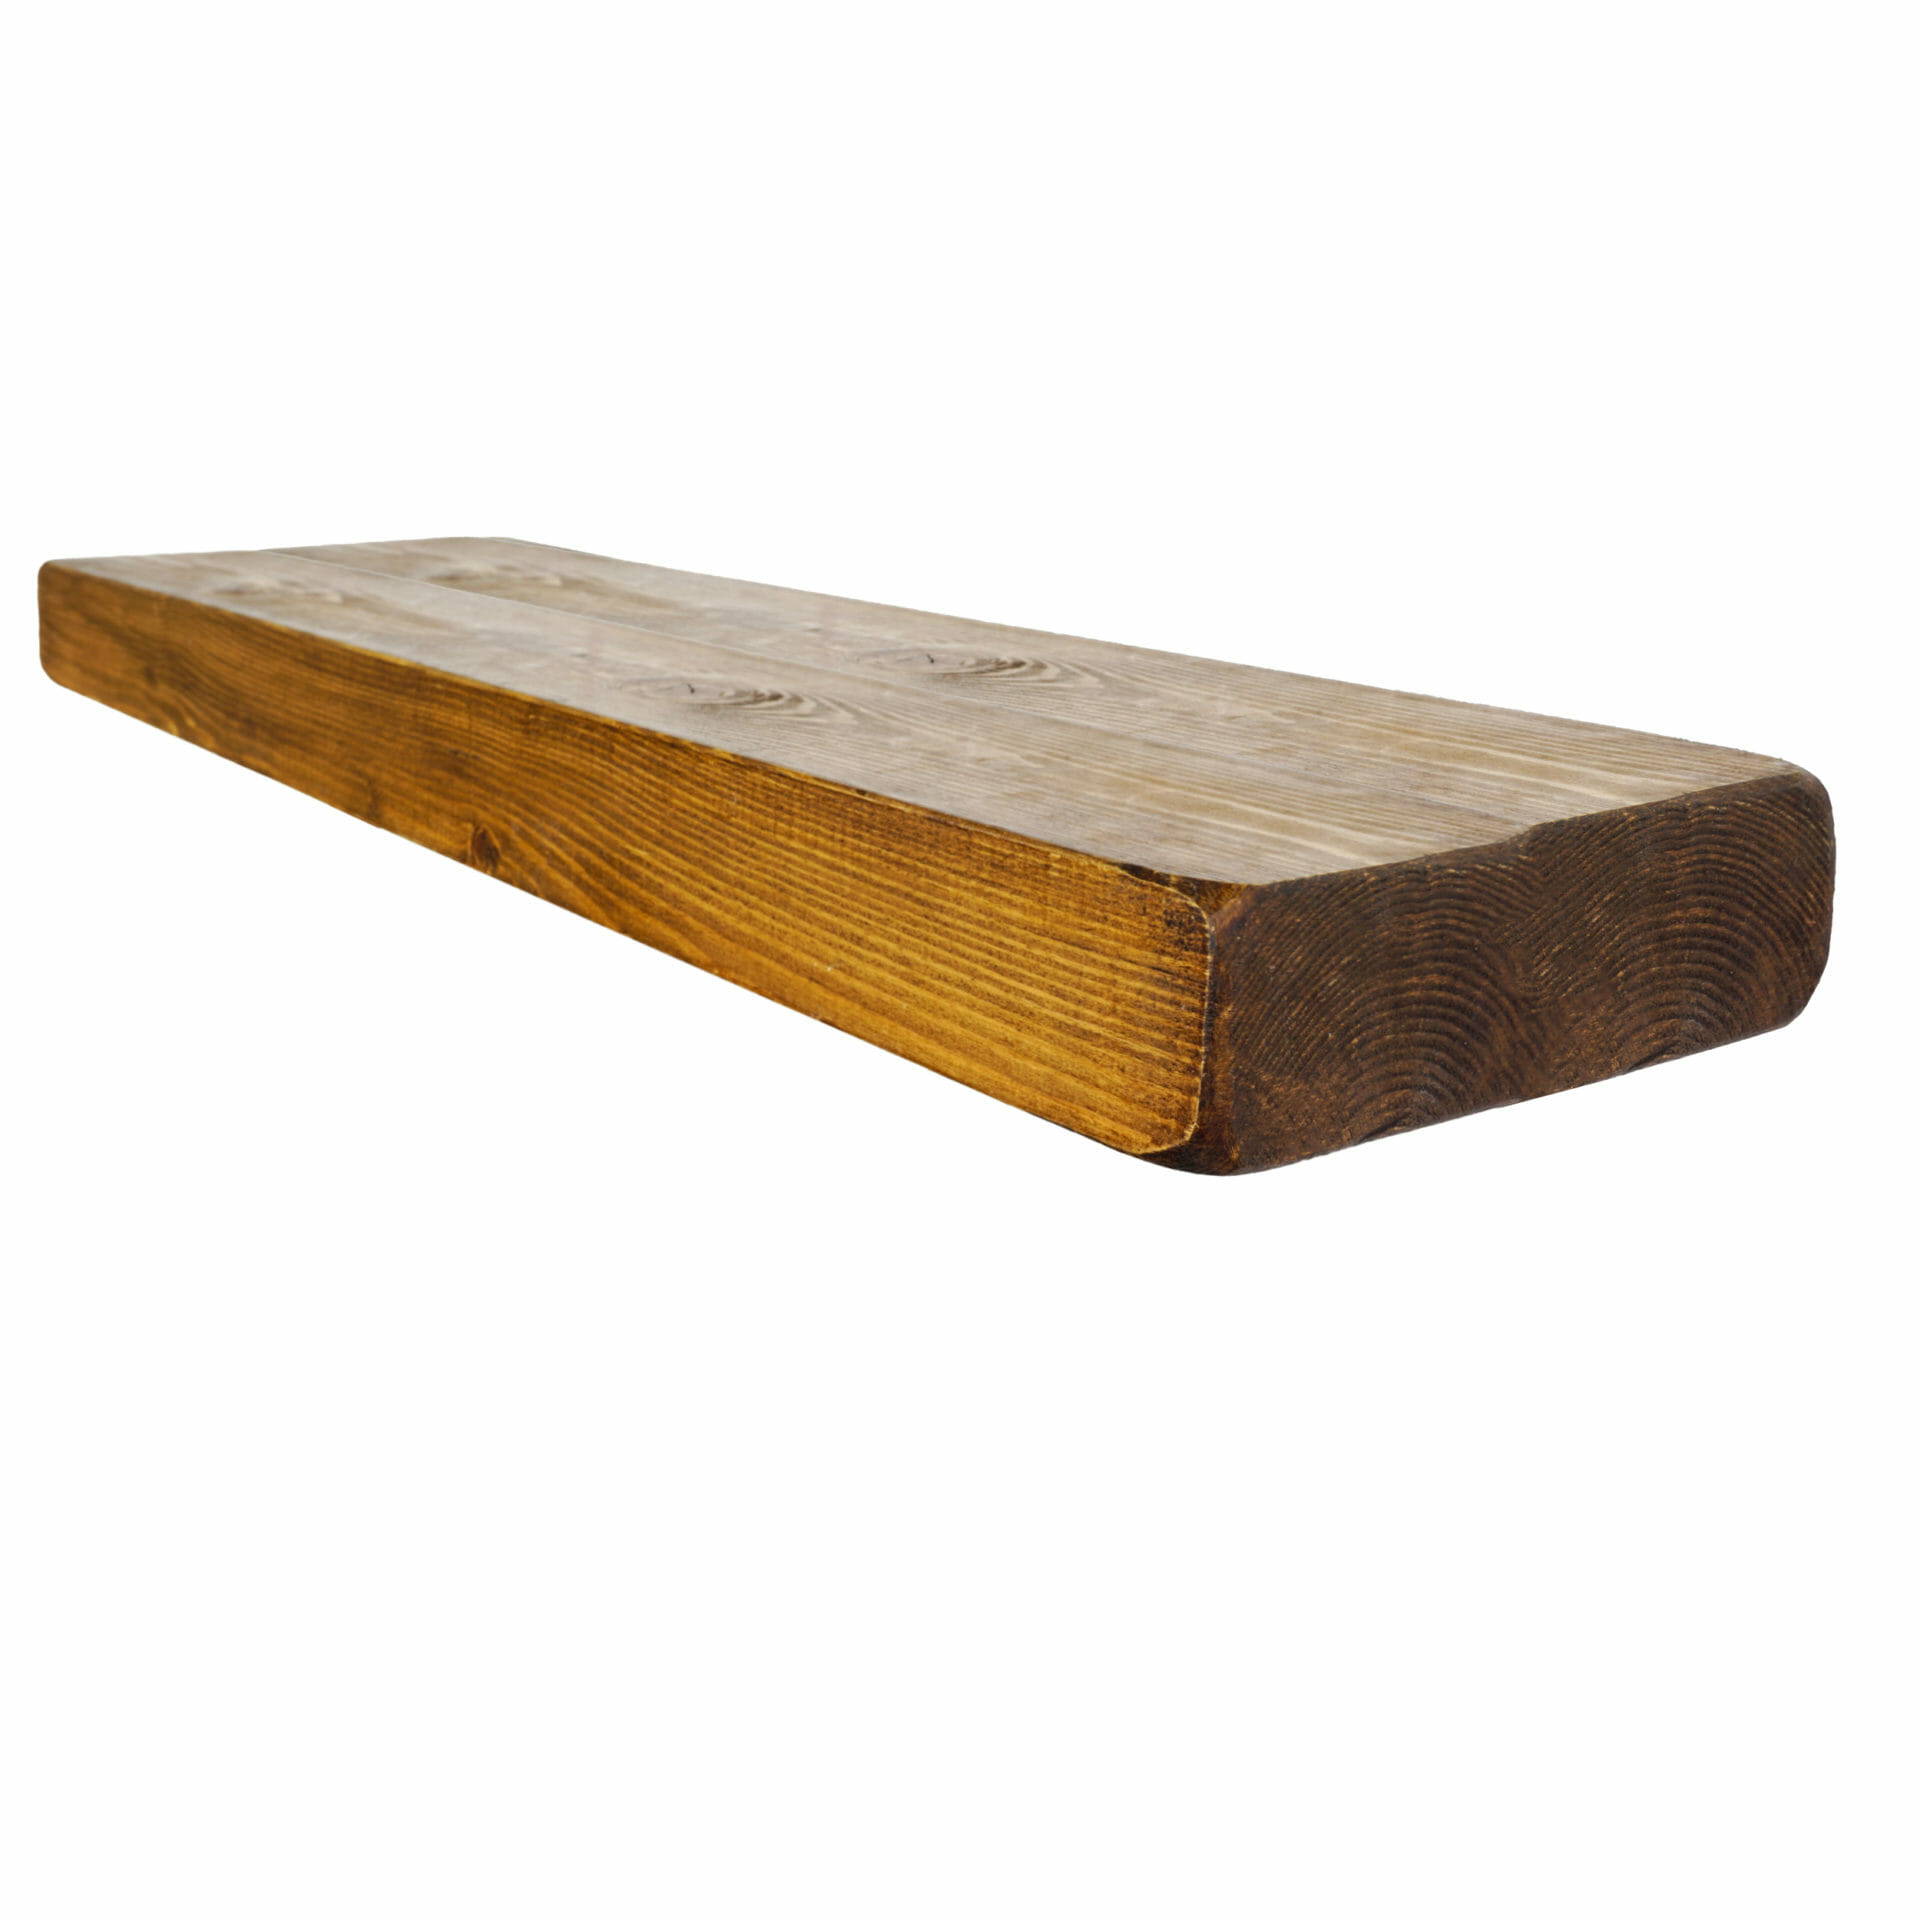 28cm-x-7cm-shelving-timber-medium-oak-wax-scaffold-board